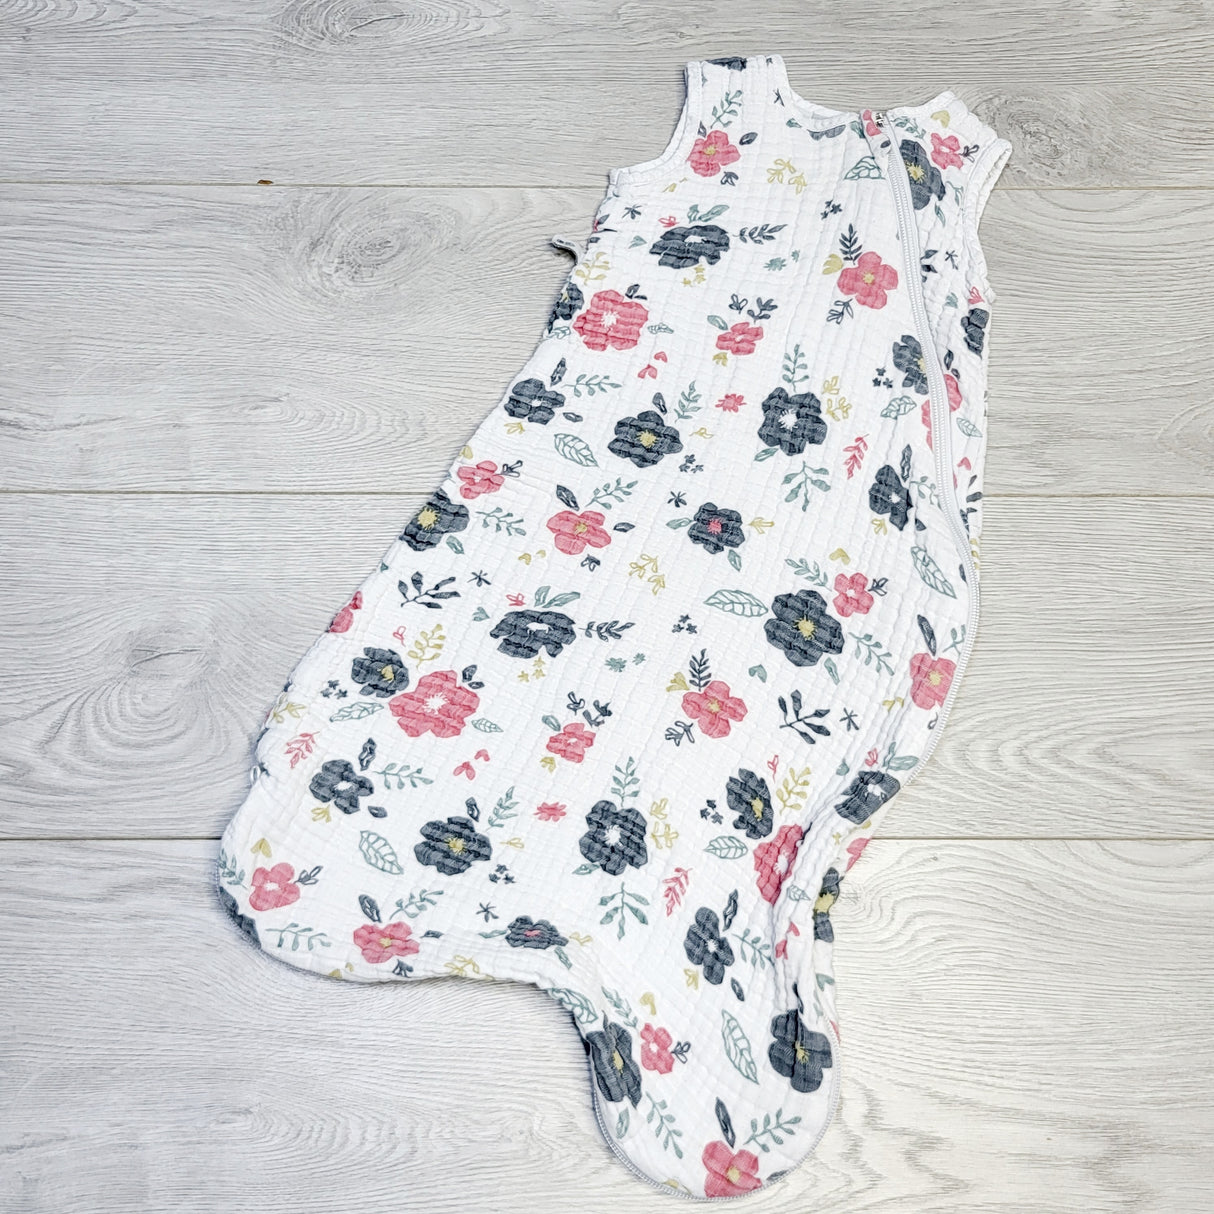 COWN1 - Perlimpinpin floral print muslin sleep sack, size 0-6 months